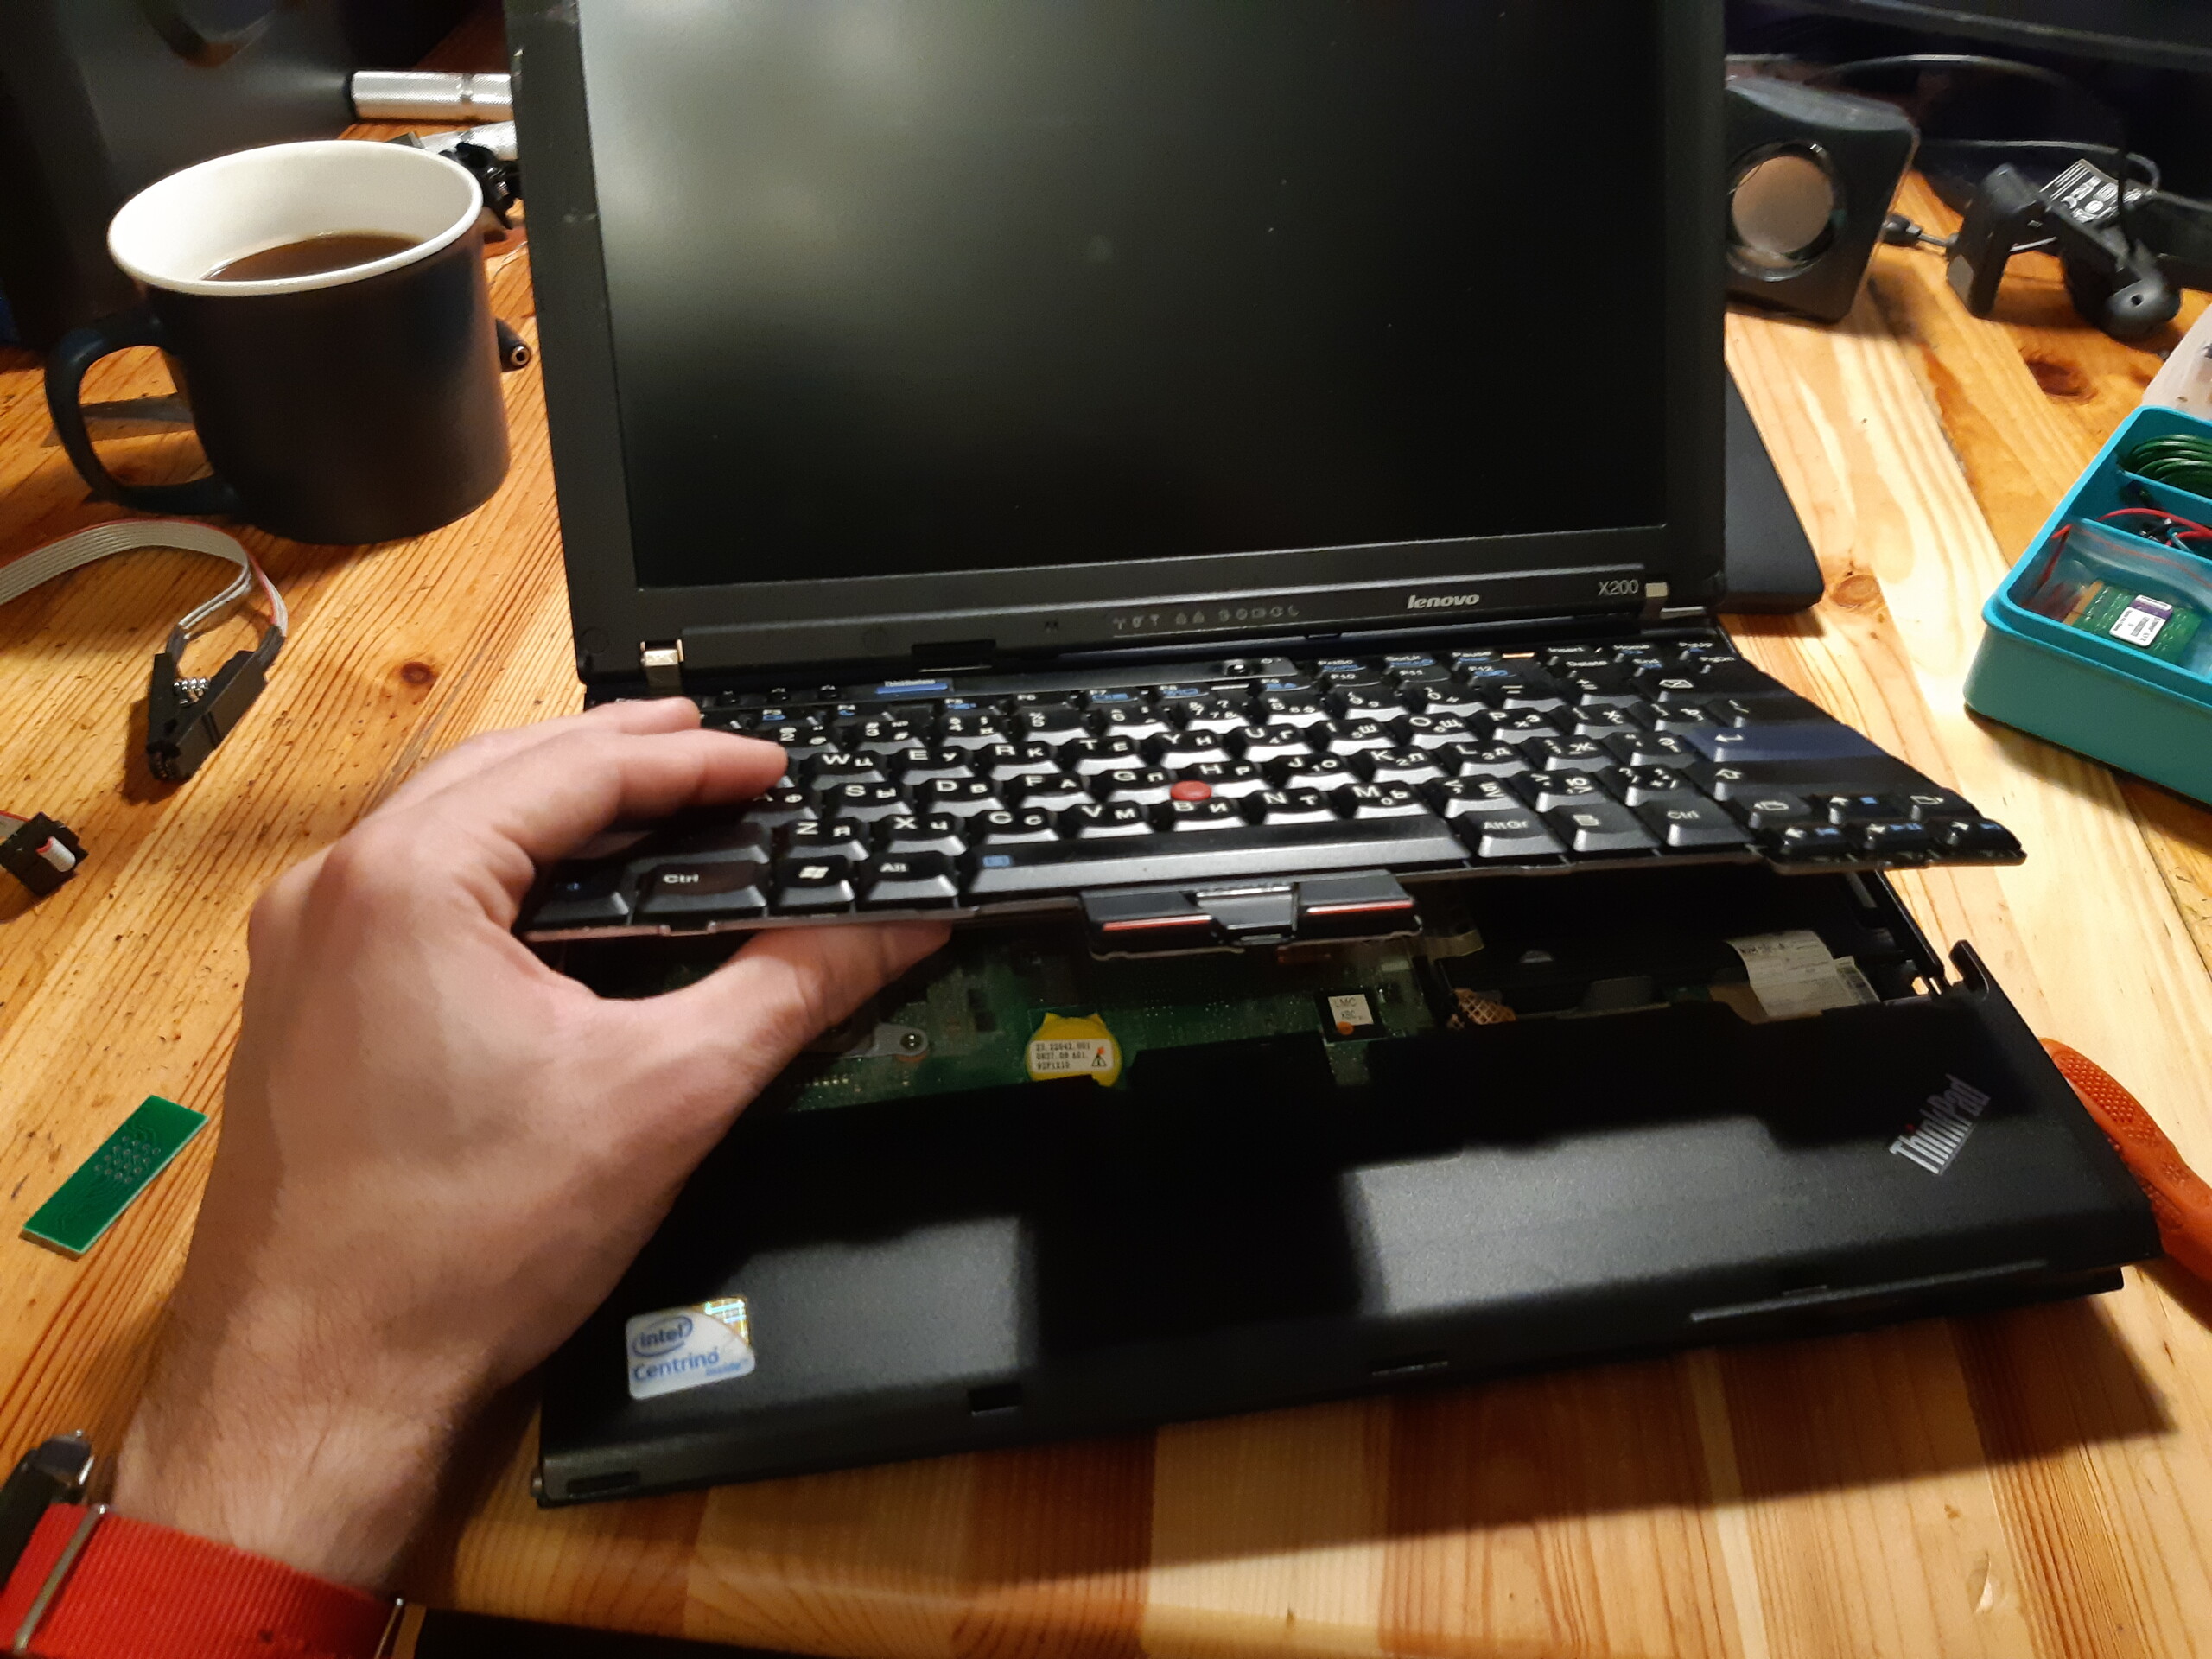 Removing keyboard and palmrest